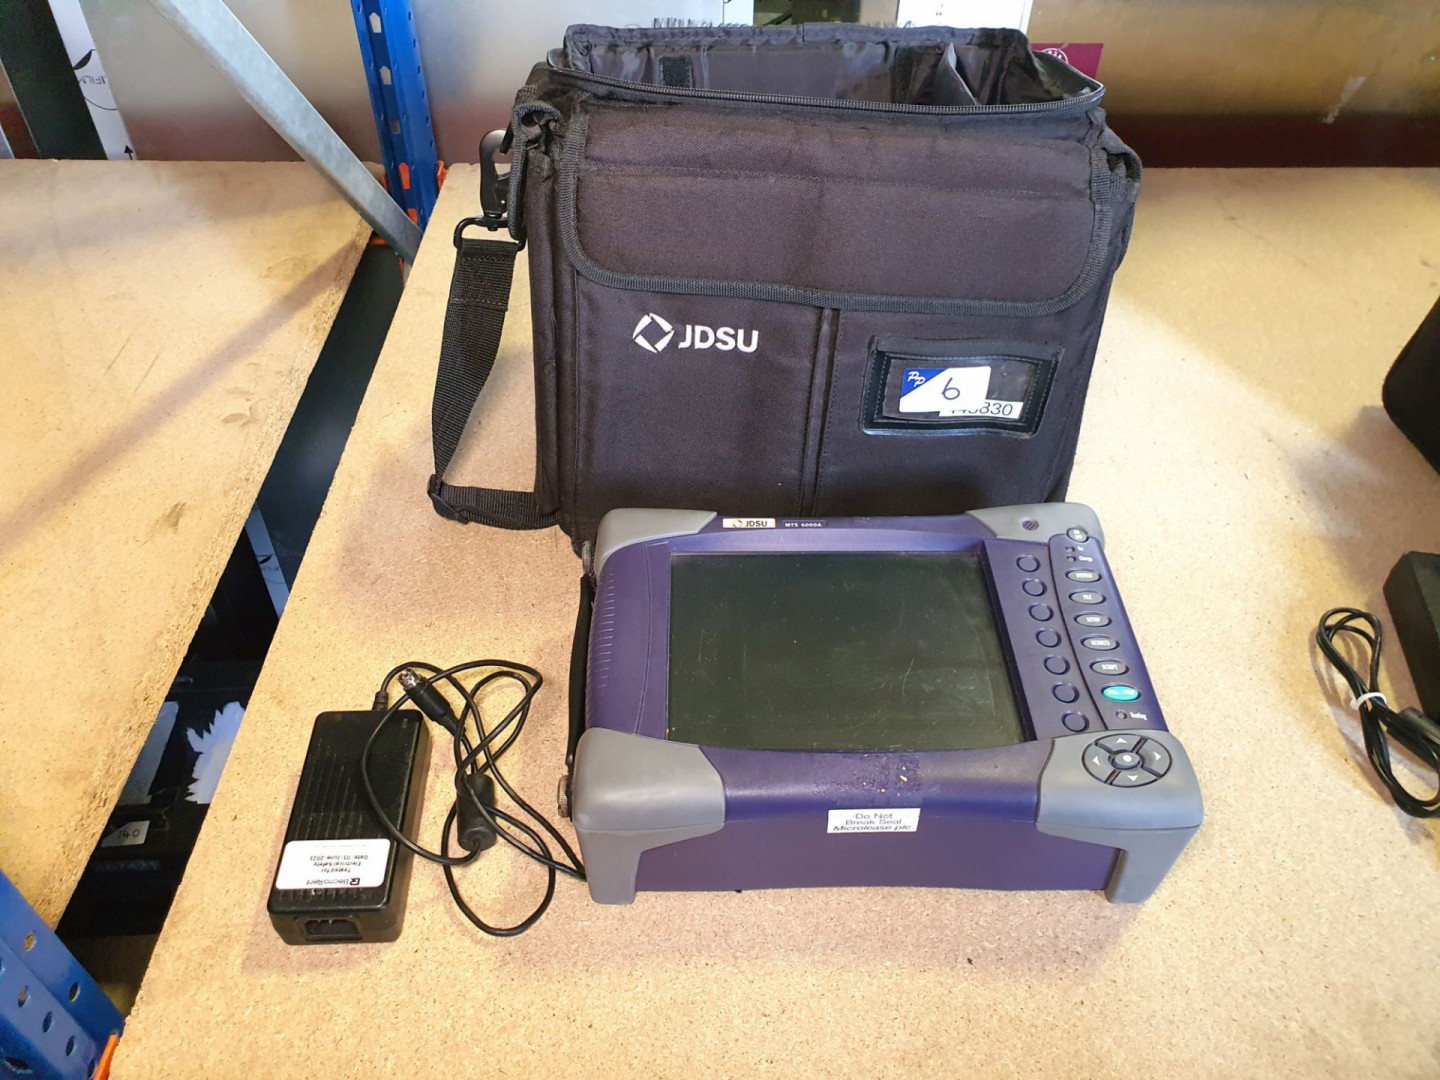 JDSU MTS-6000A handheld test set in carry case